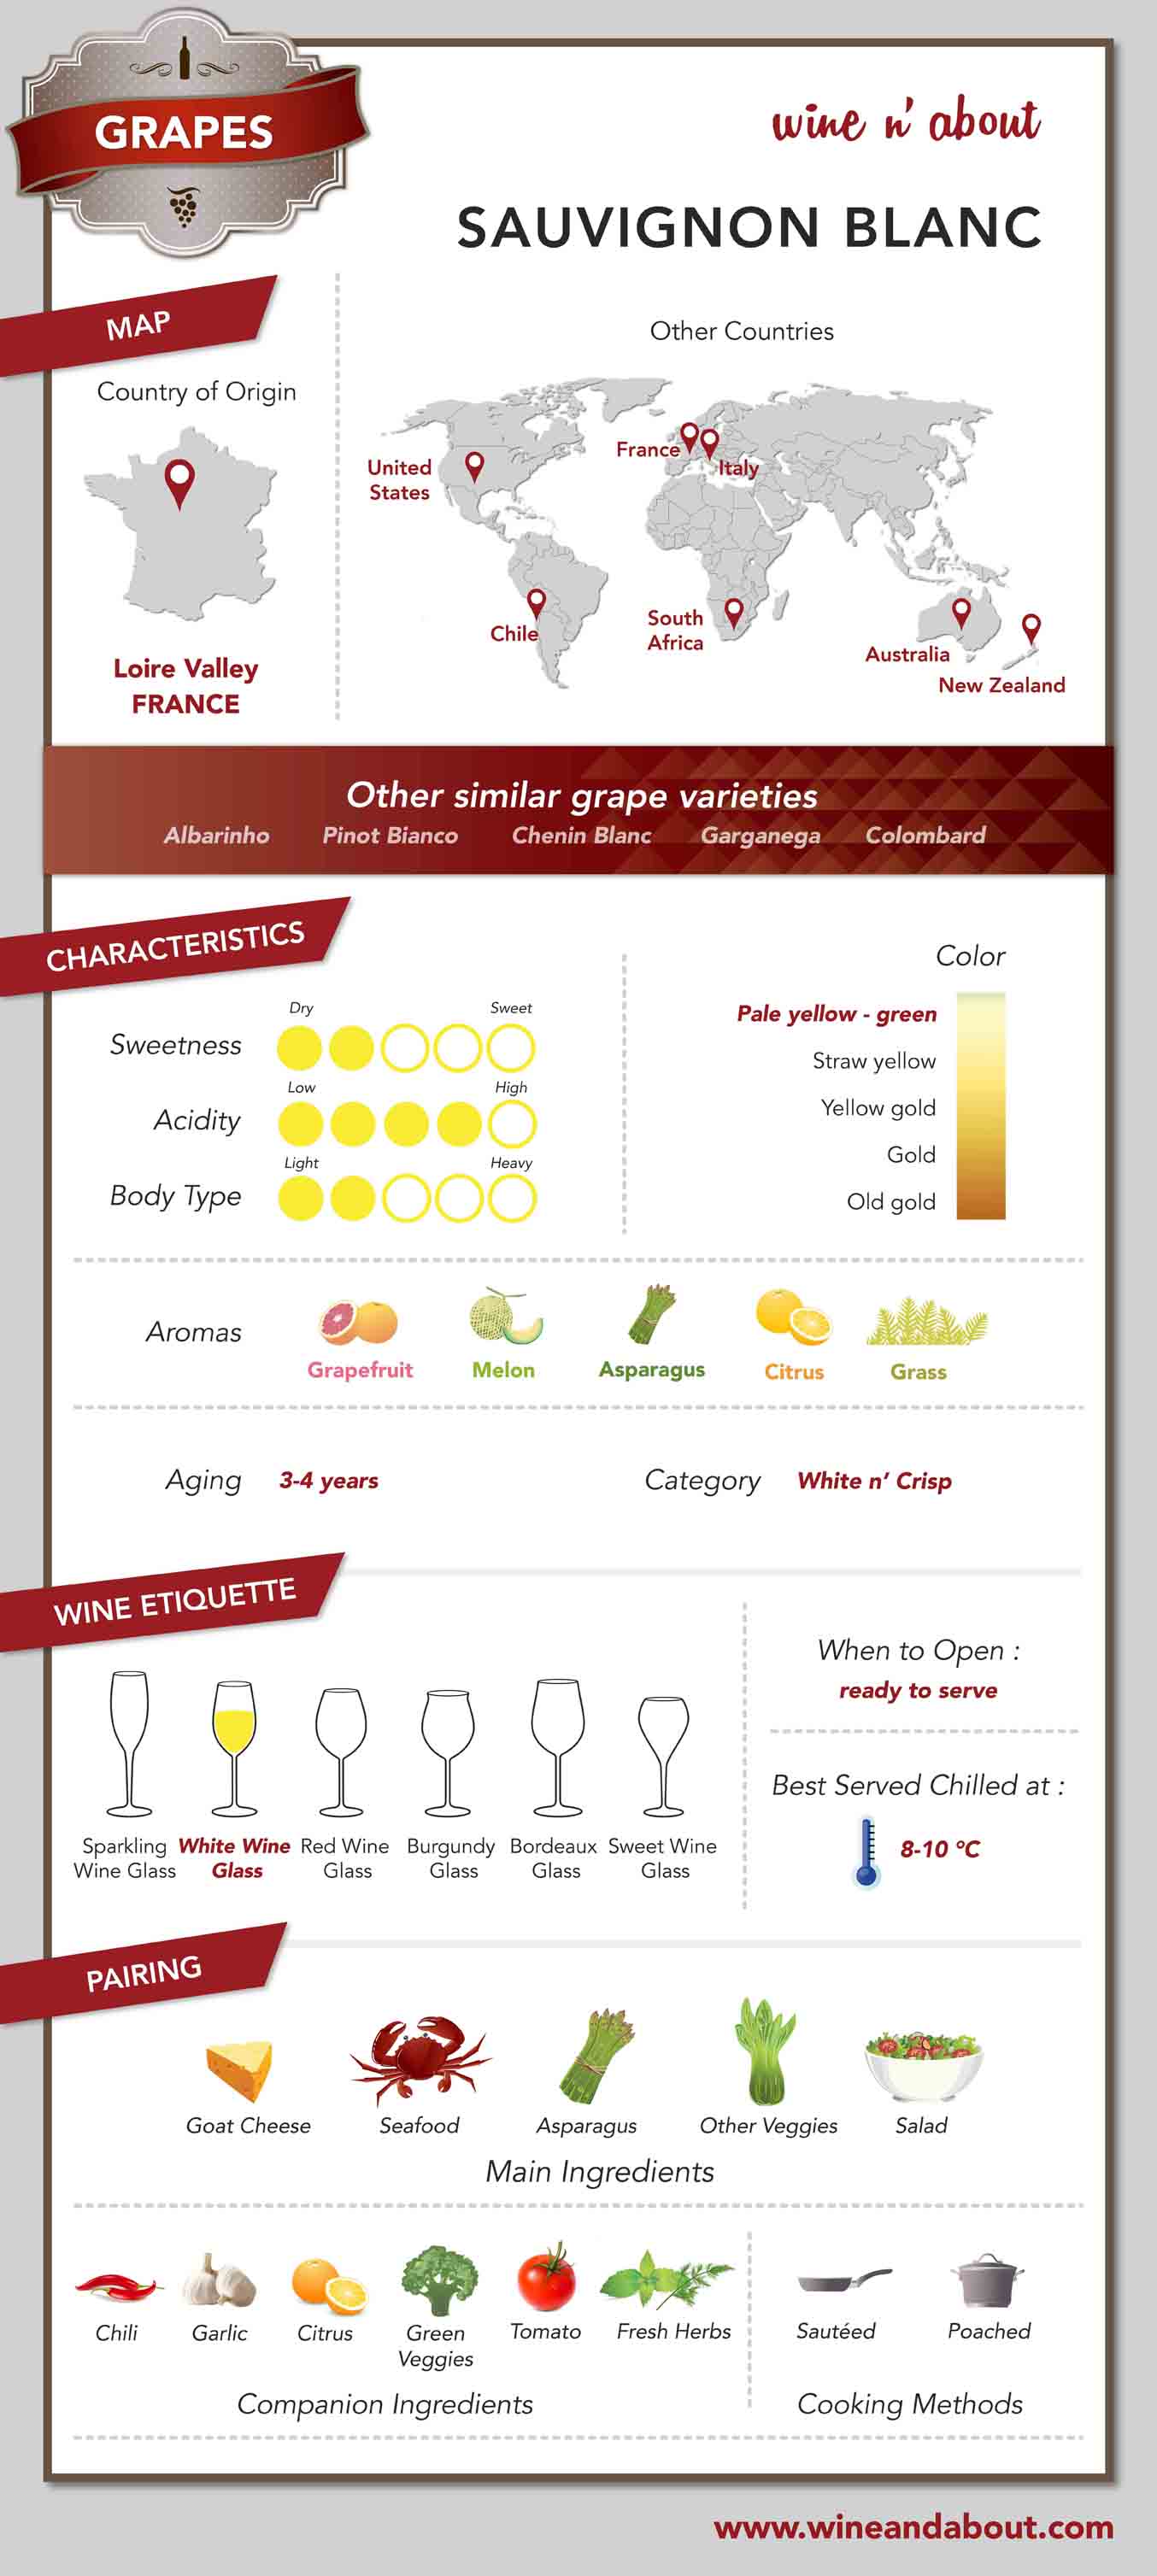 Wine&About-D1-GRAPE-SAUVIGNON BLANC_140218